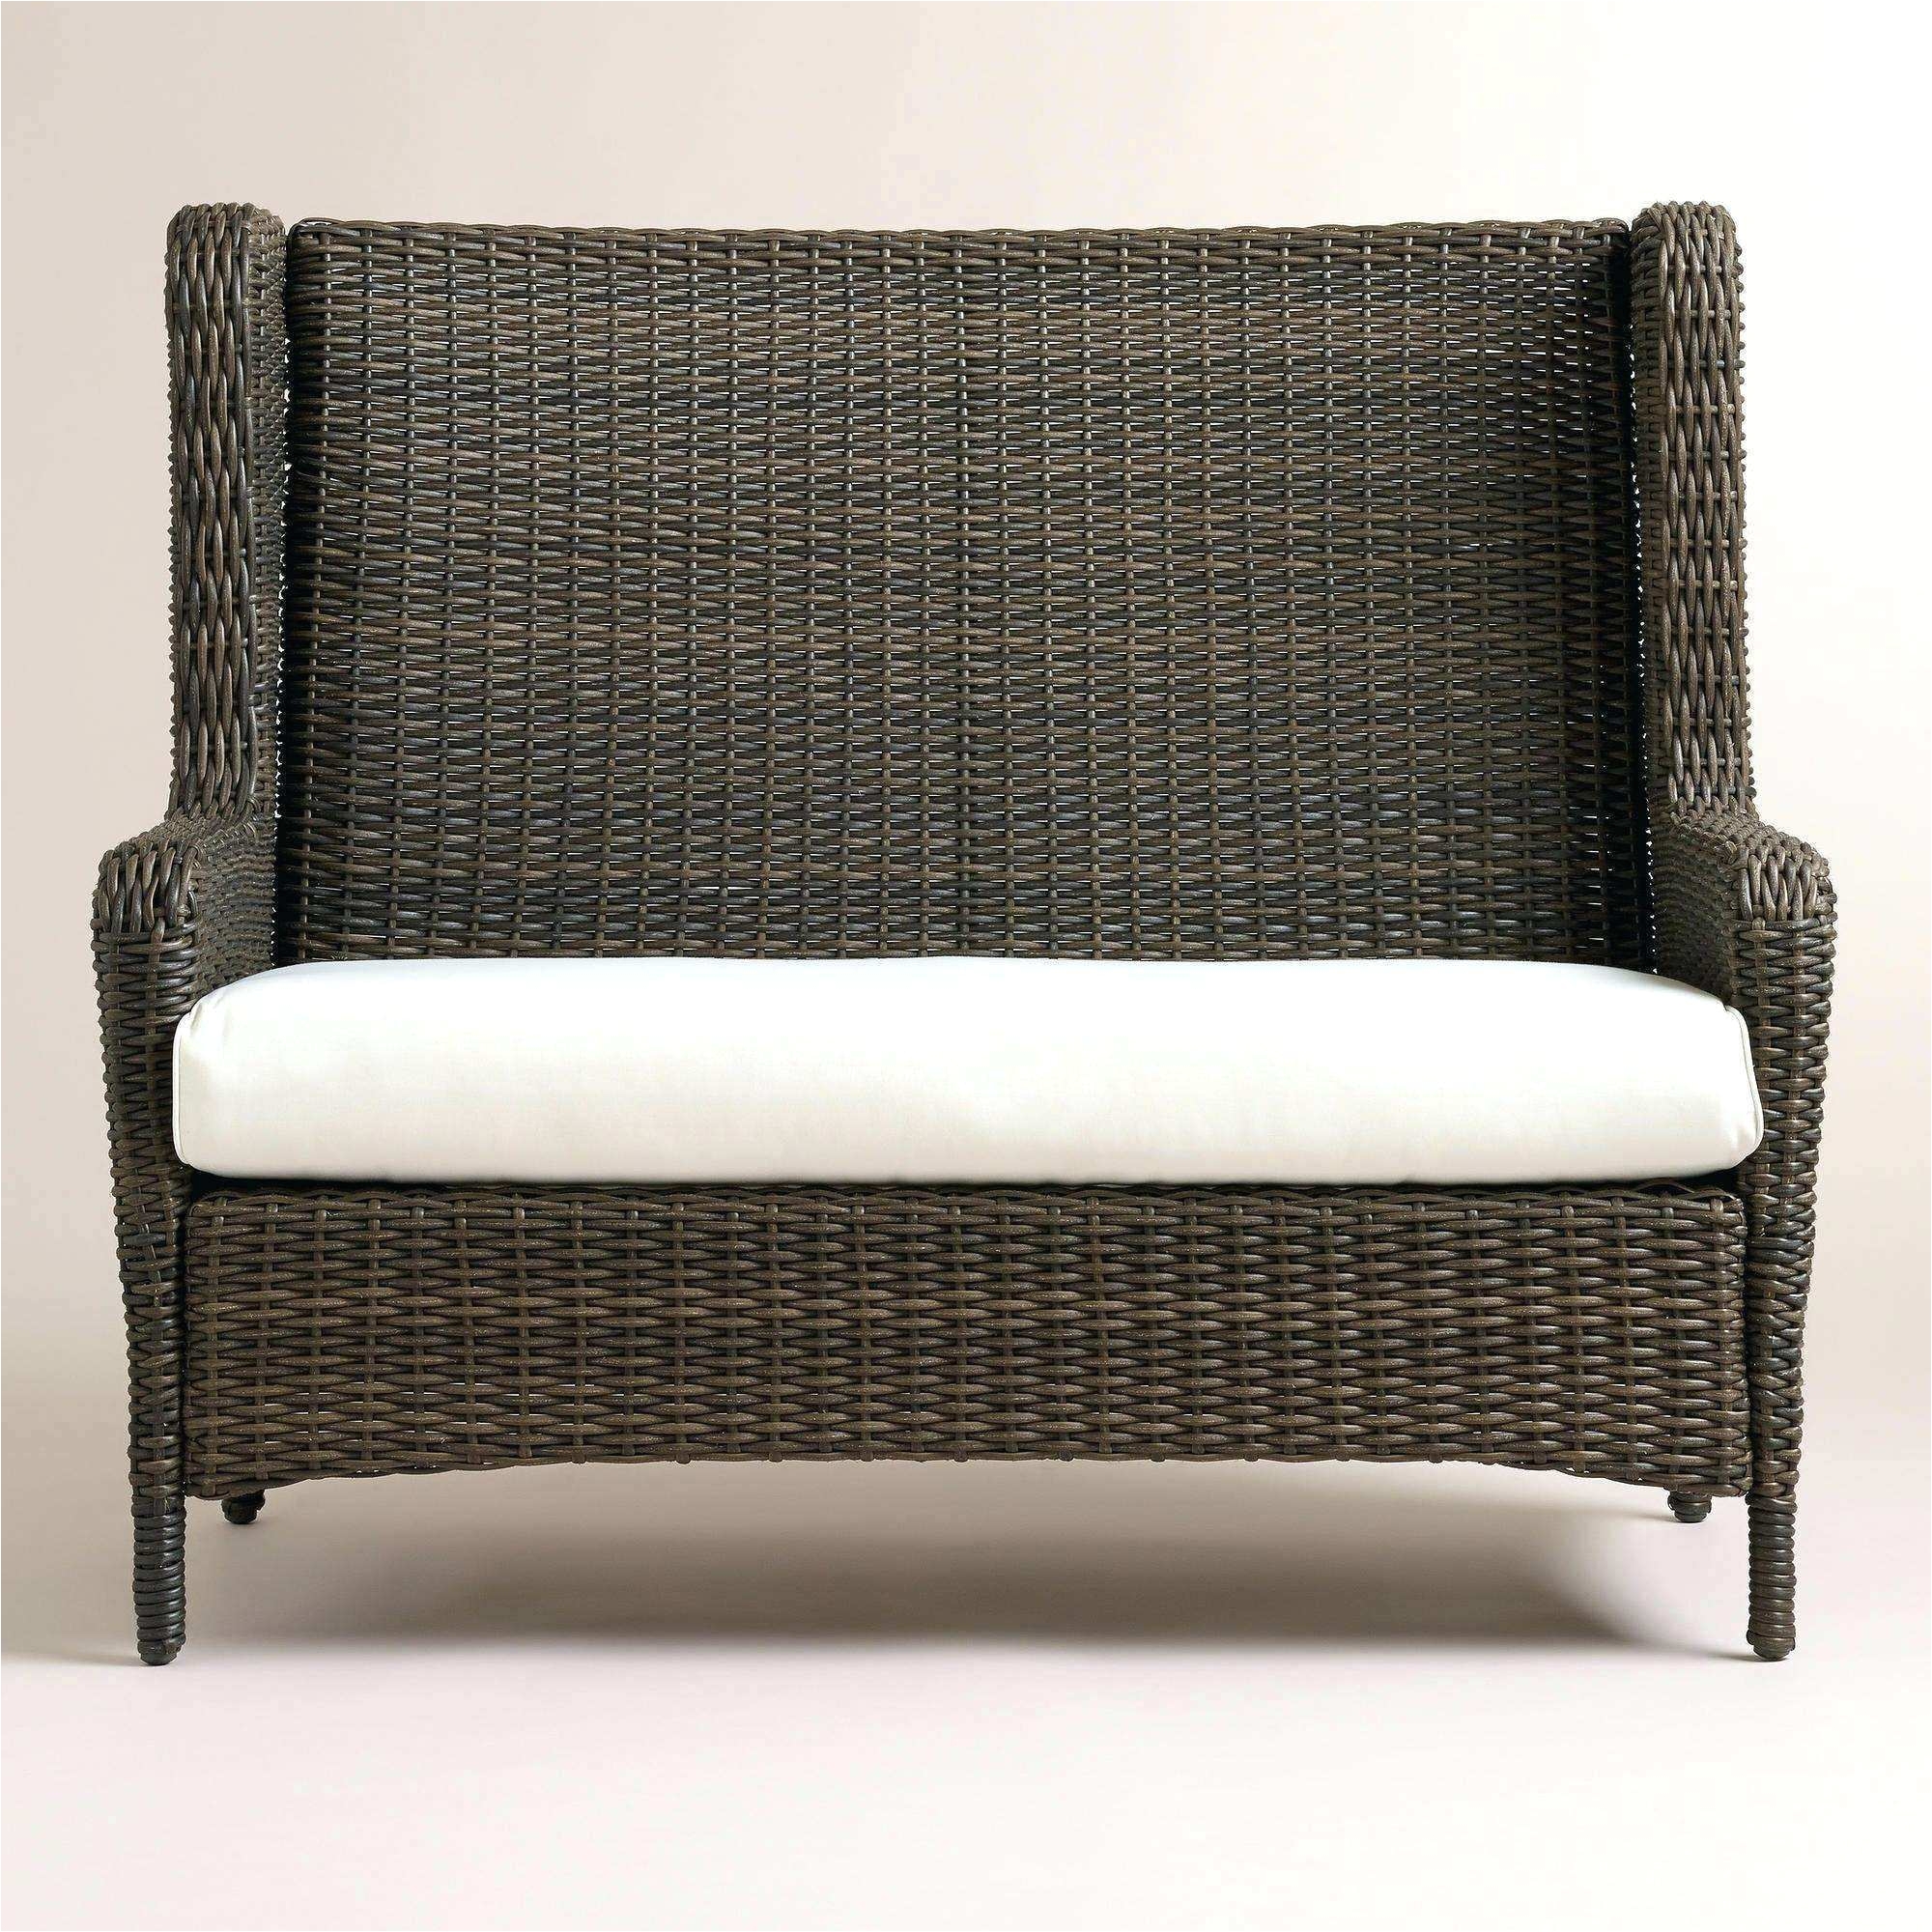 Companies that Buy Furniture Patio Companies Fresh Wicker Outdoor sofa 0d Patio Chairs Sale